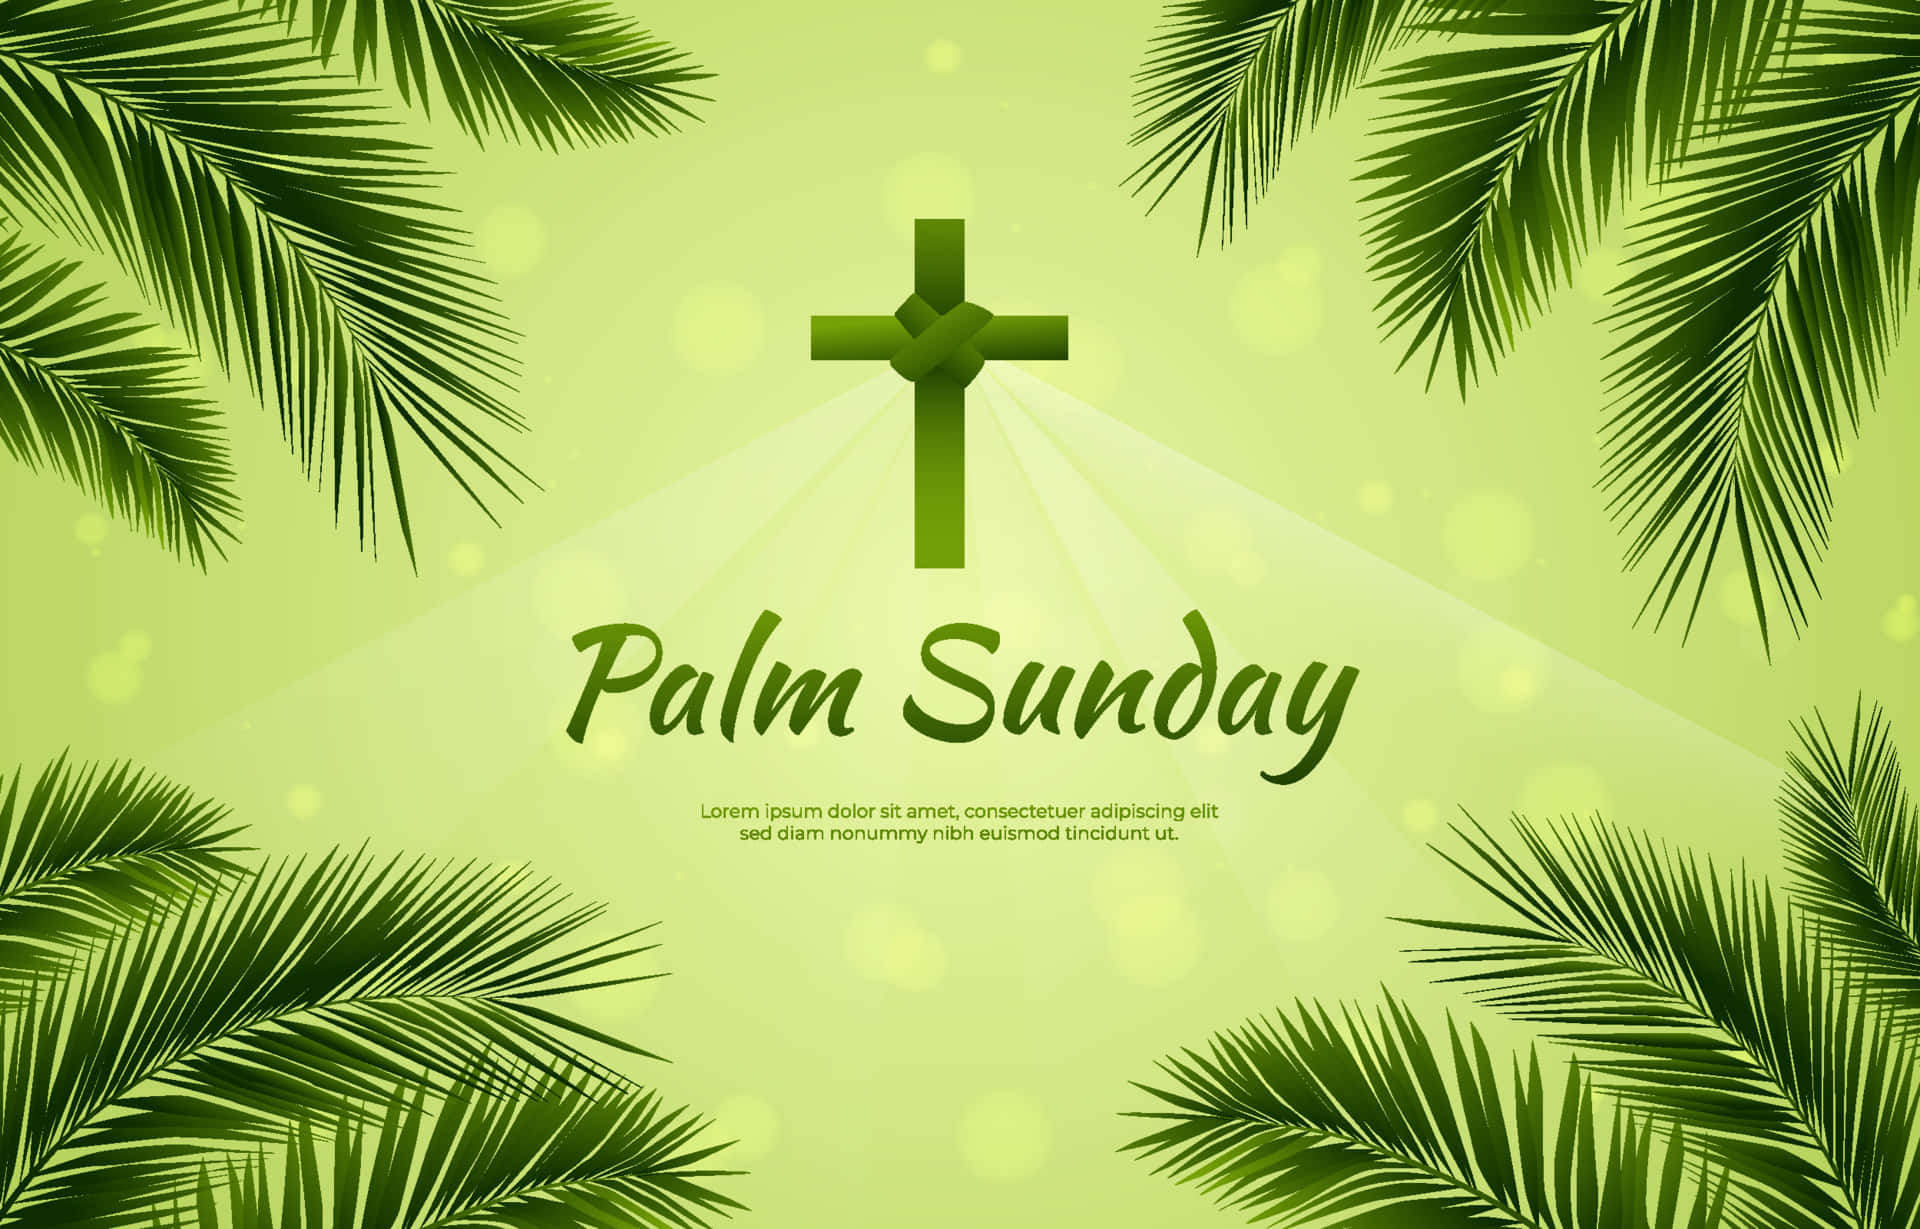 Artistic Palm Sunday Light Green Background